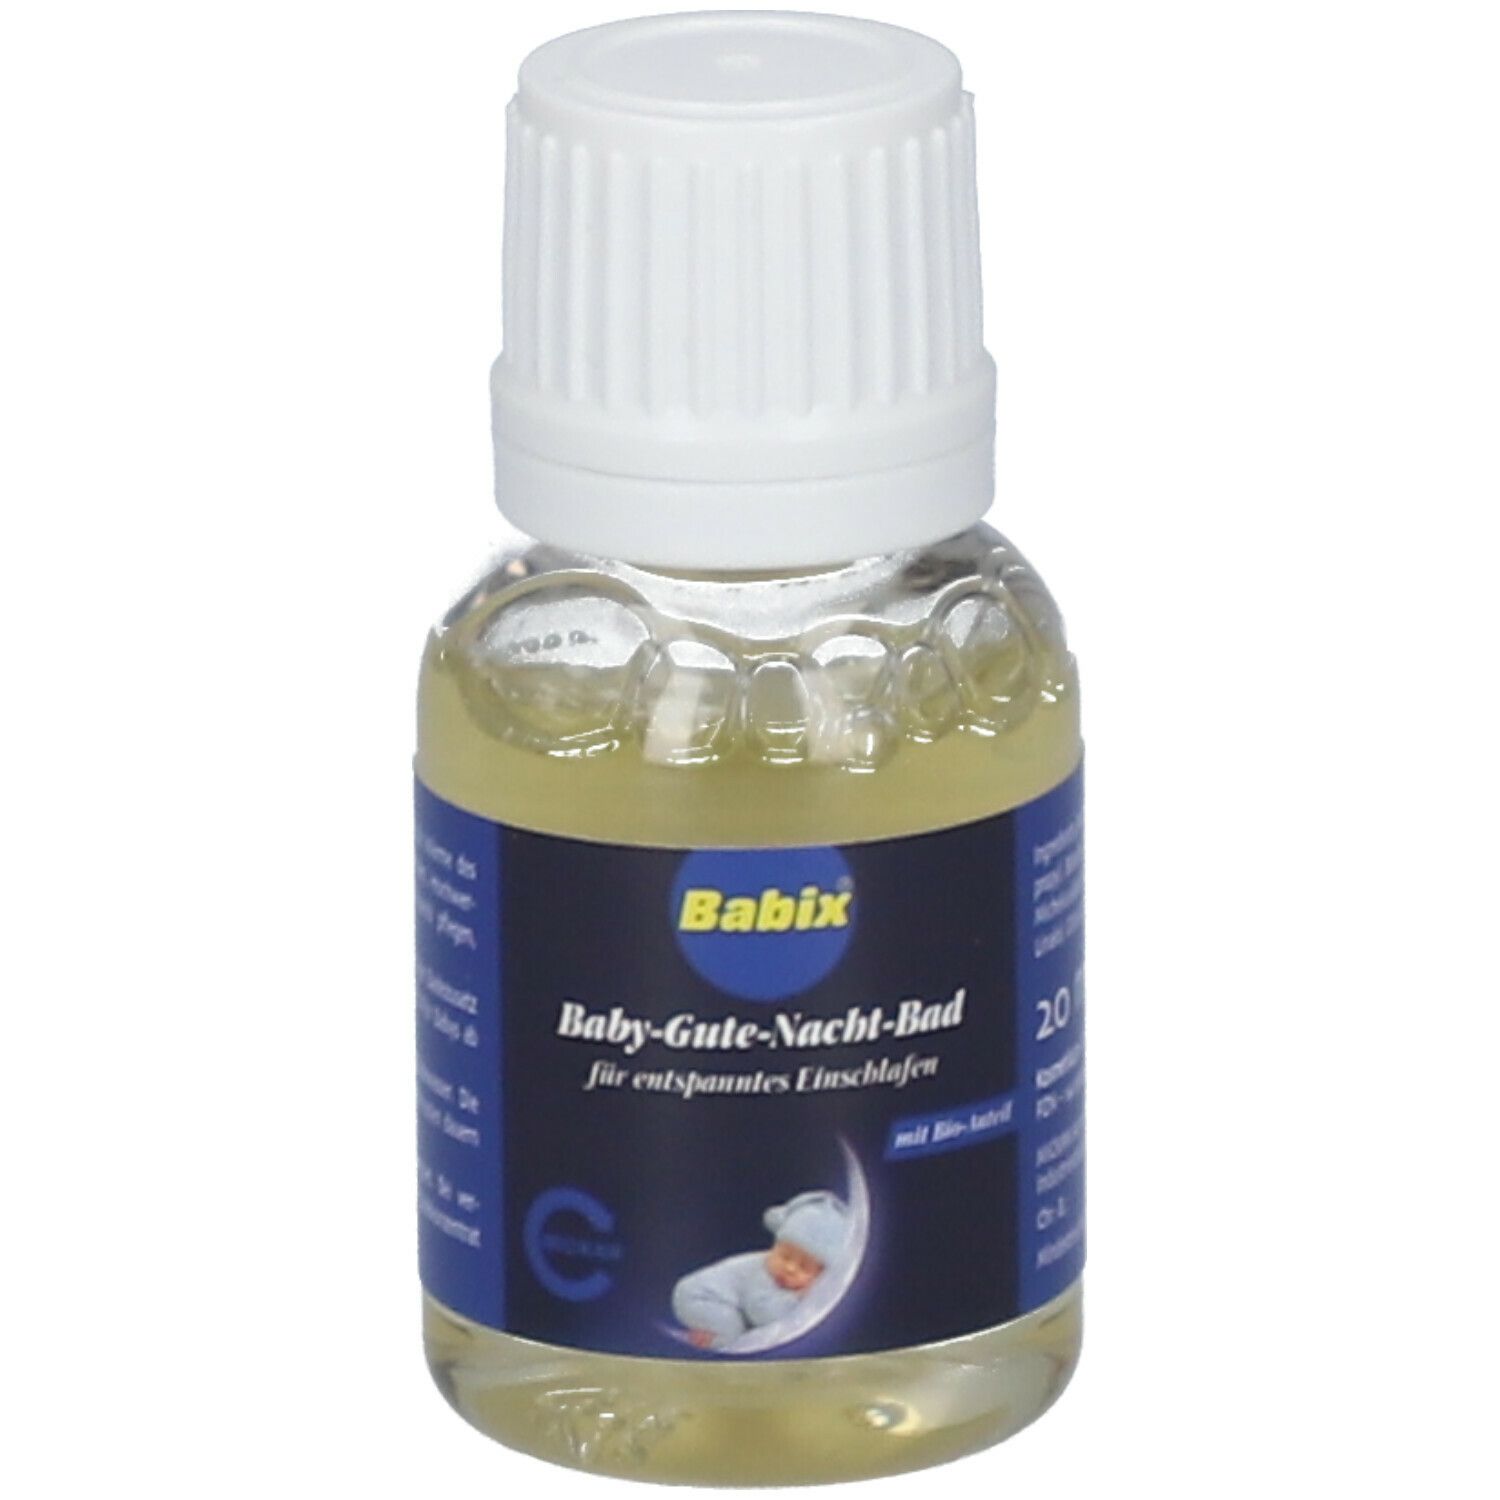 MICKAN Arzneimittel GmbH Babix® Baby-Gute-Nacht-Bad